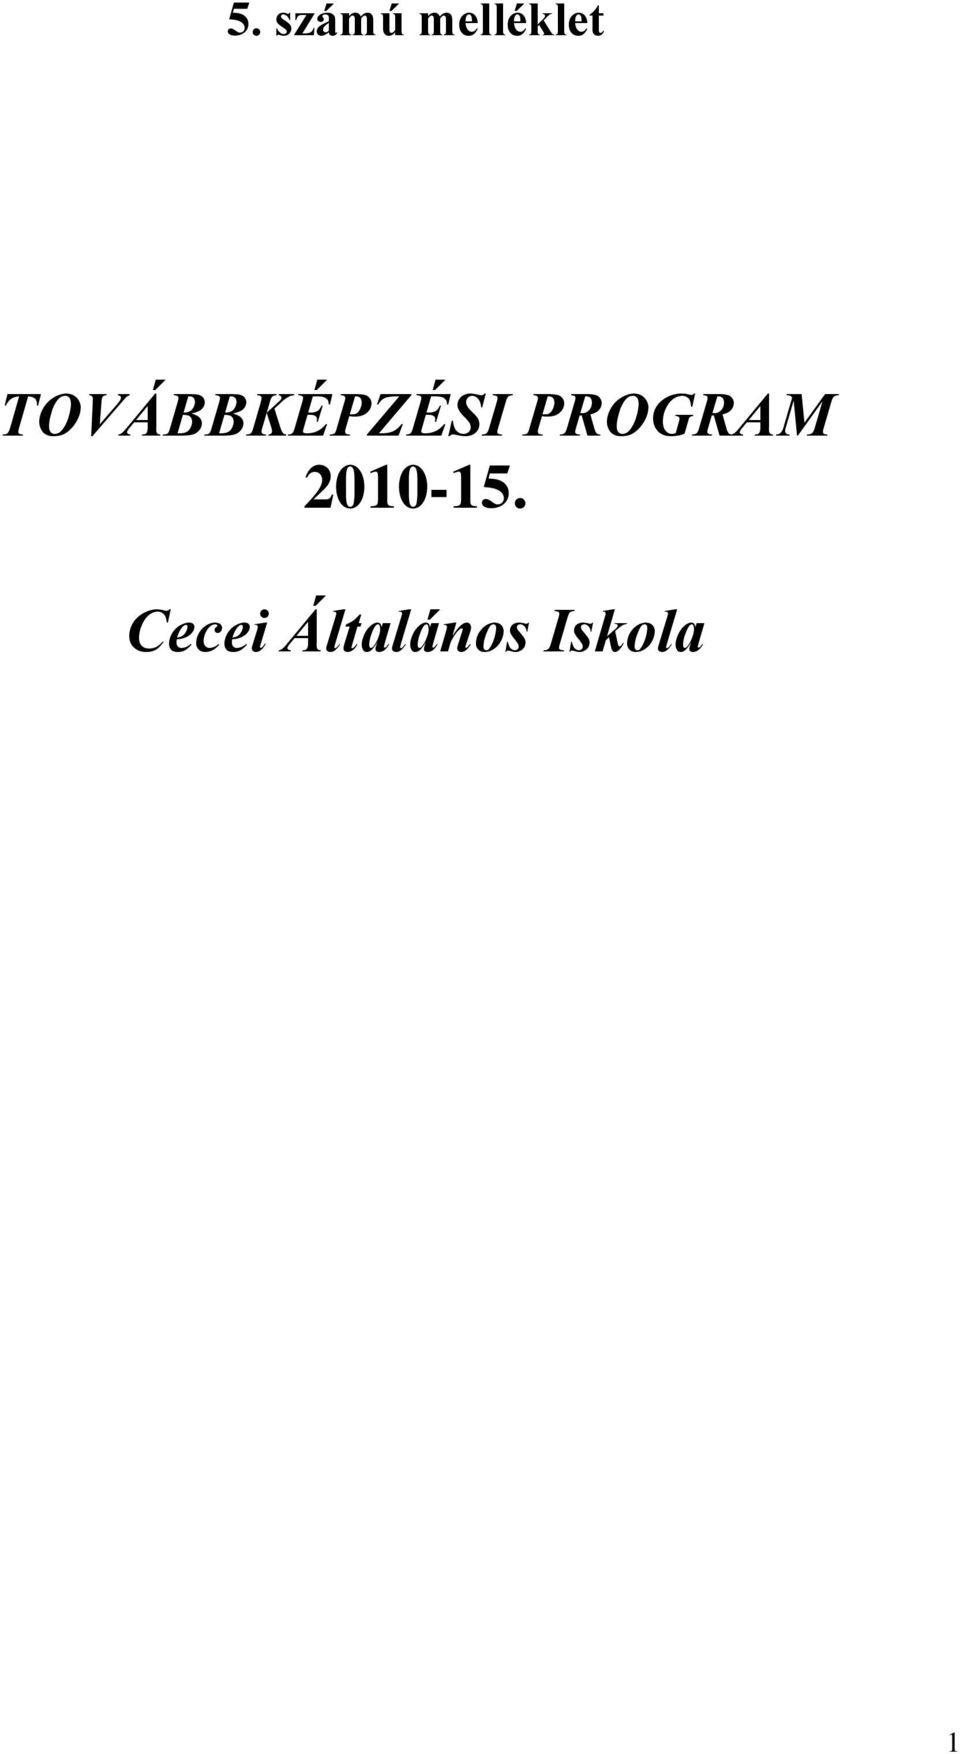 PROGRAM 2010-15.